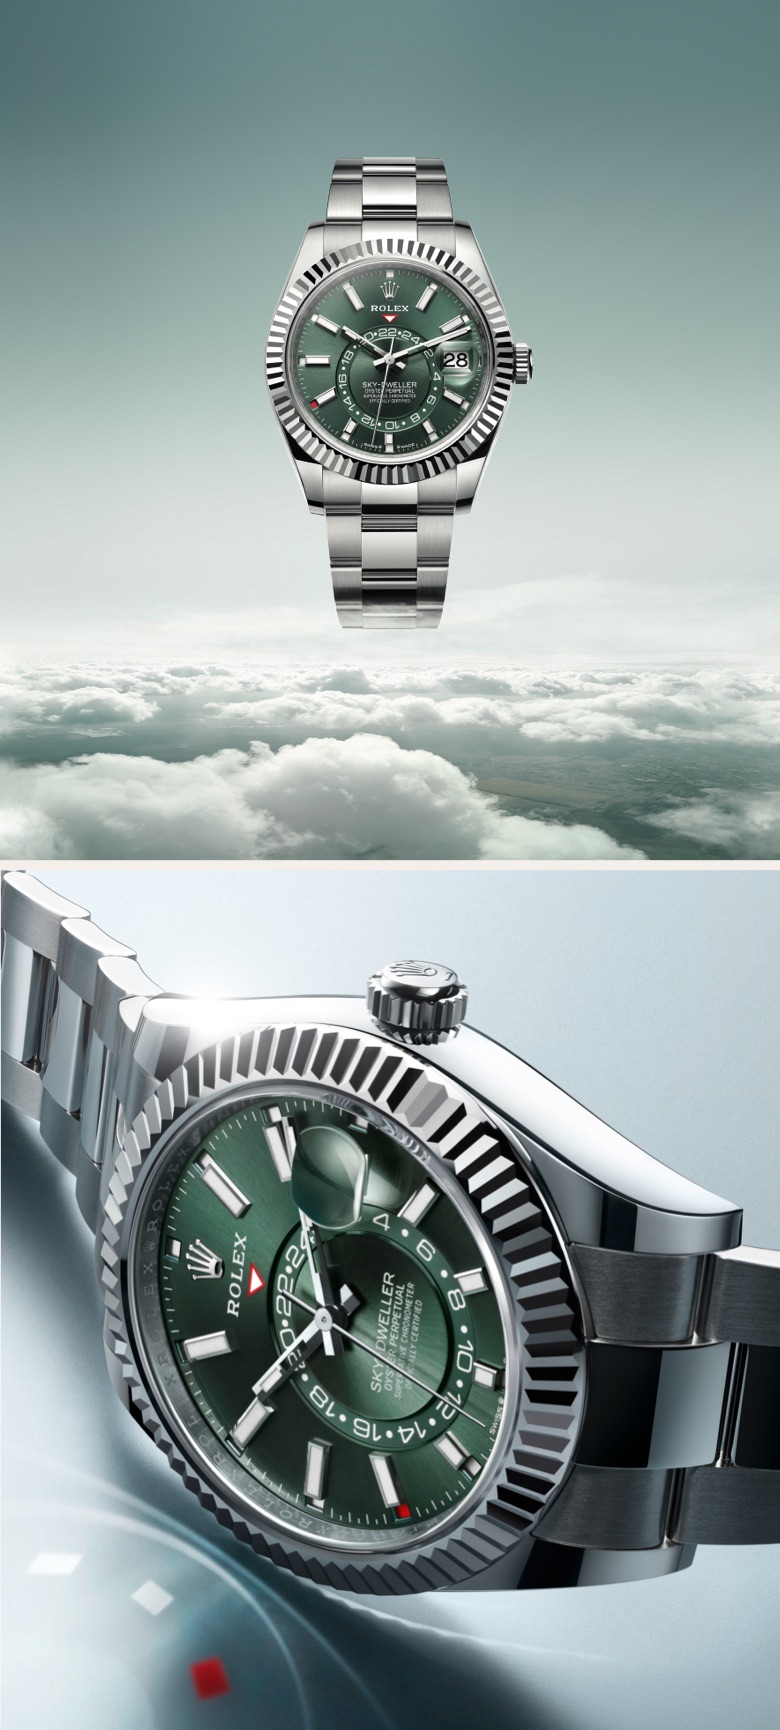 Rolex Sky-dweller watches